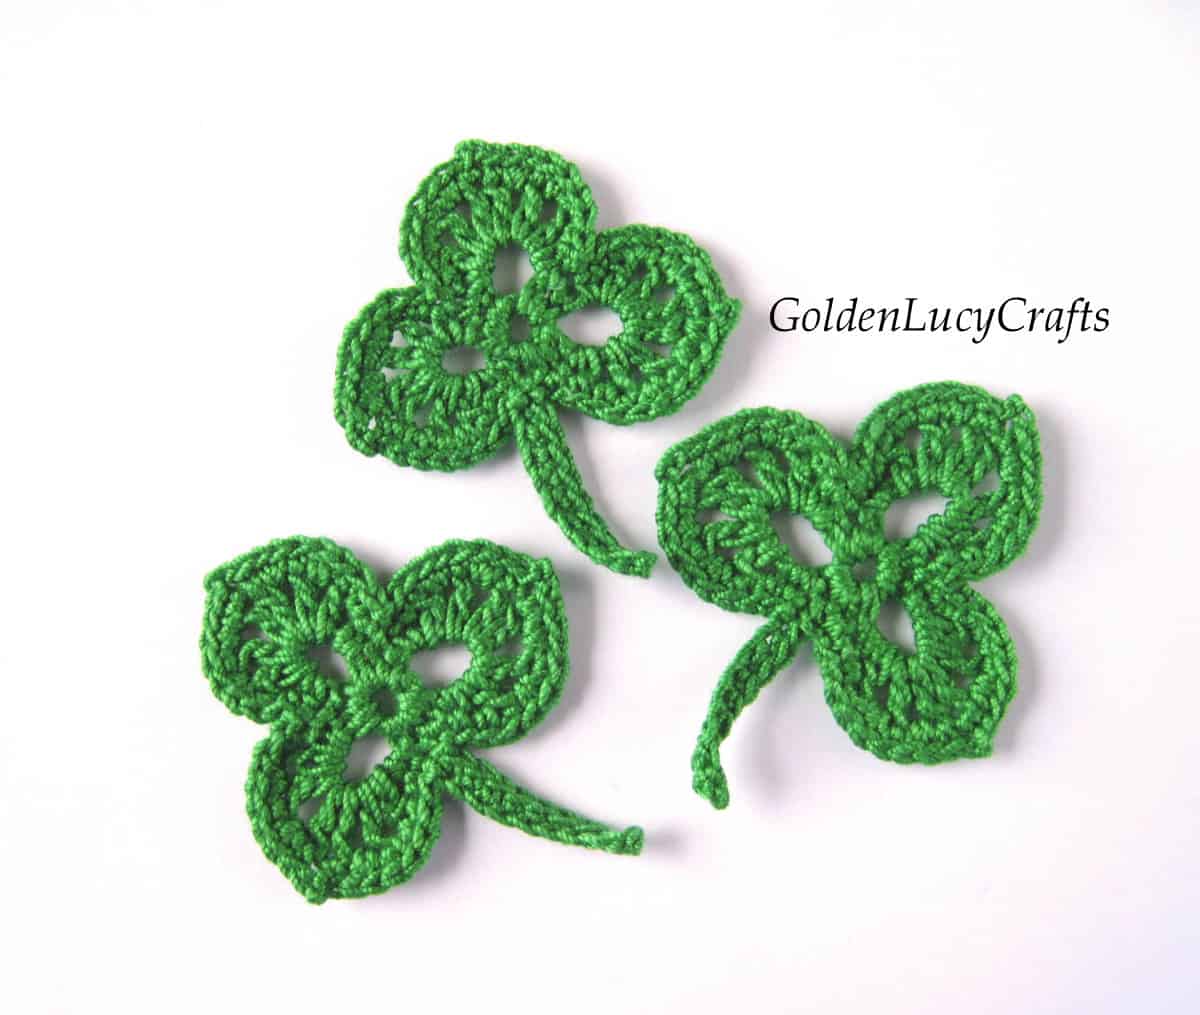 Three crocheted shamrock leaves.